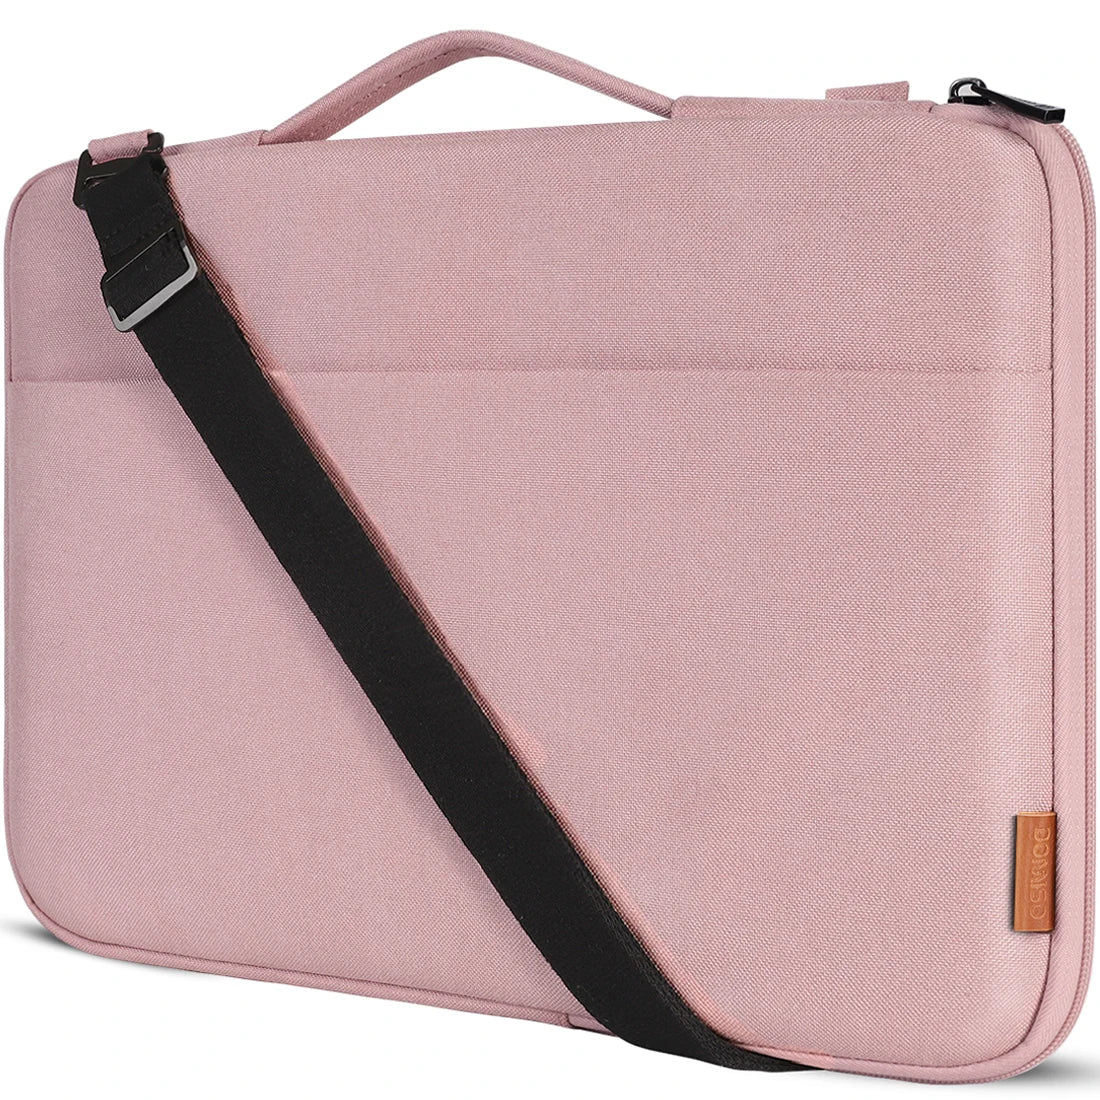 Stylish Waterproof Laptop Sleeve Laptop Bags & Cases BeSmashing Pink 10 inch 